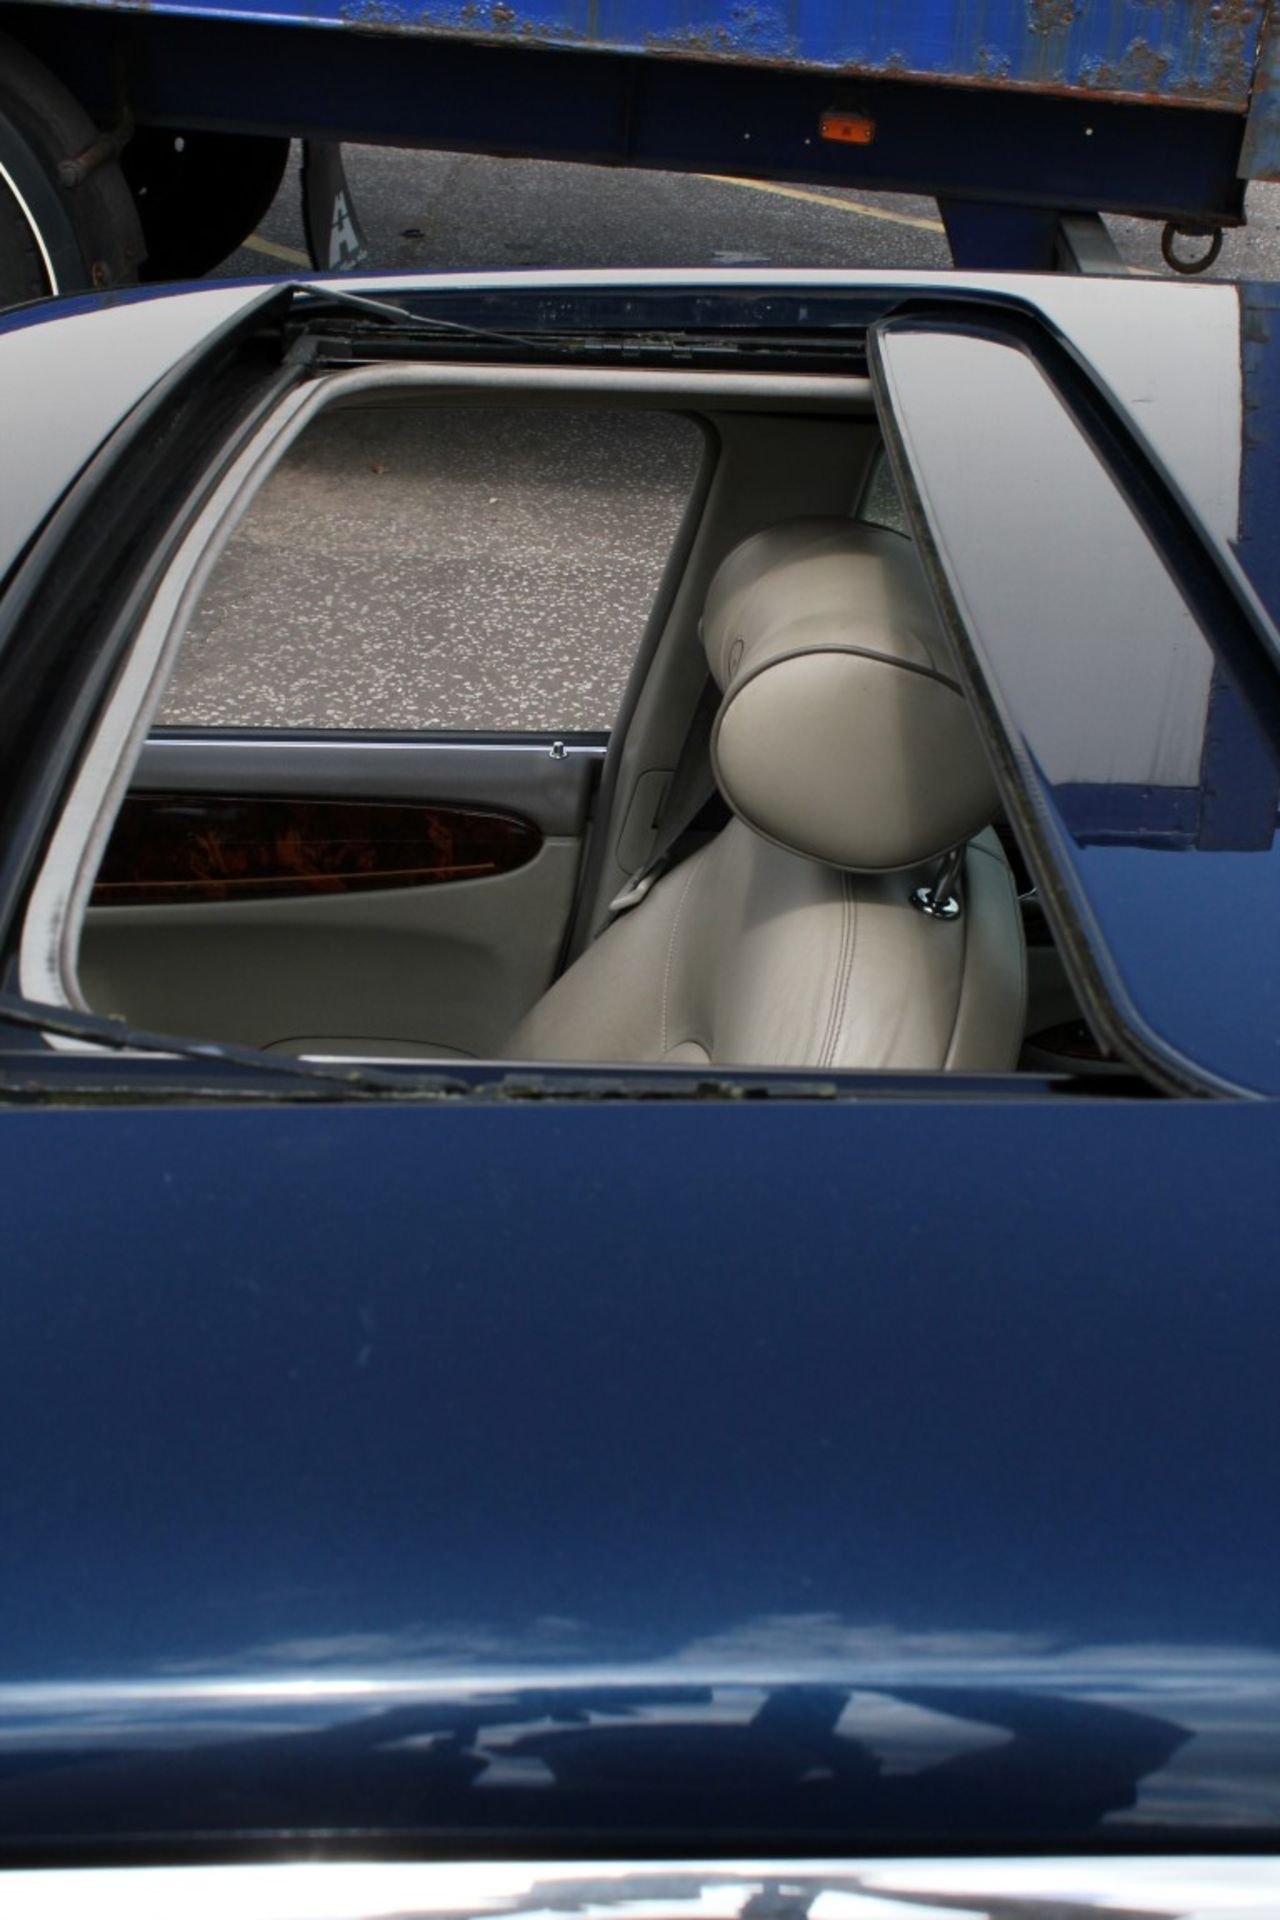 1 x Jaguar Daimler Super V8 Auto 4-Door Saloon - Year 2001 - Blue - Odometer Reading 122,520 - MOT - Image 76 of 77